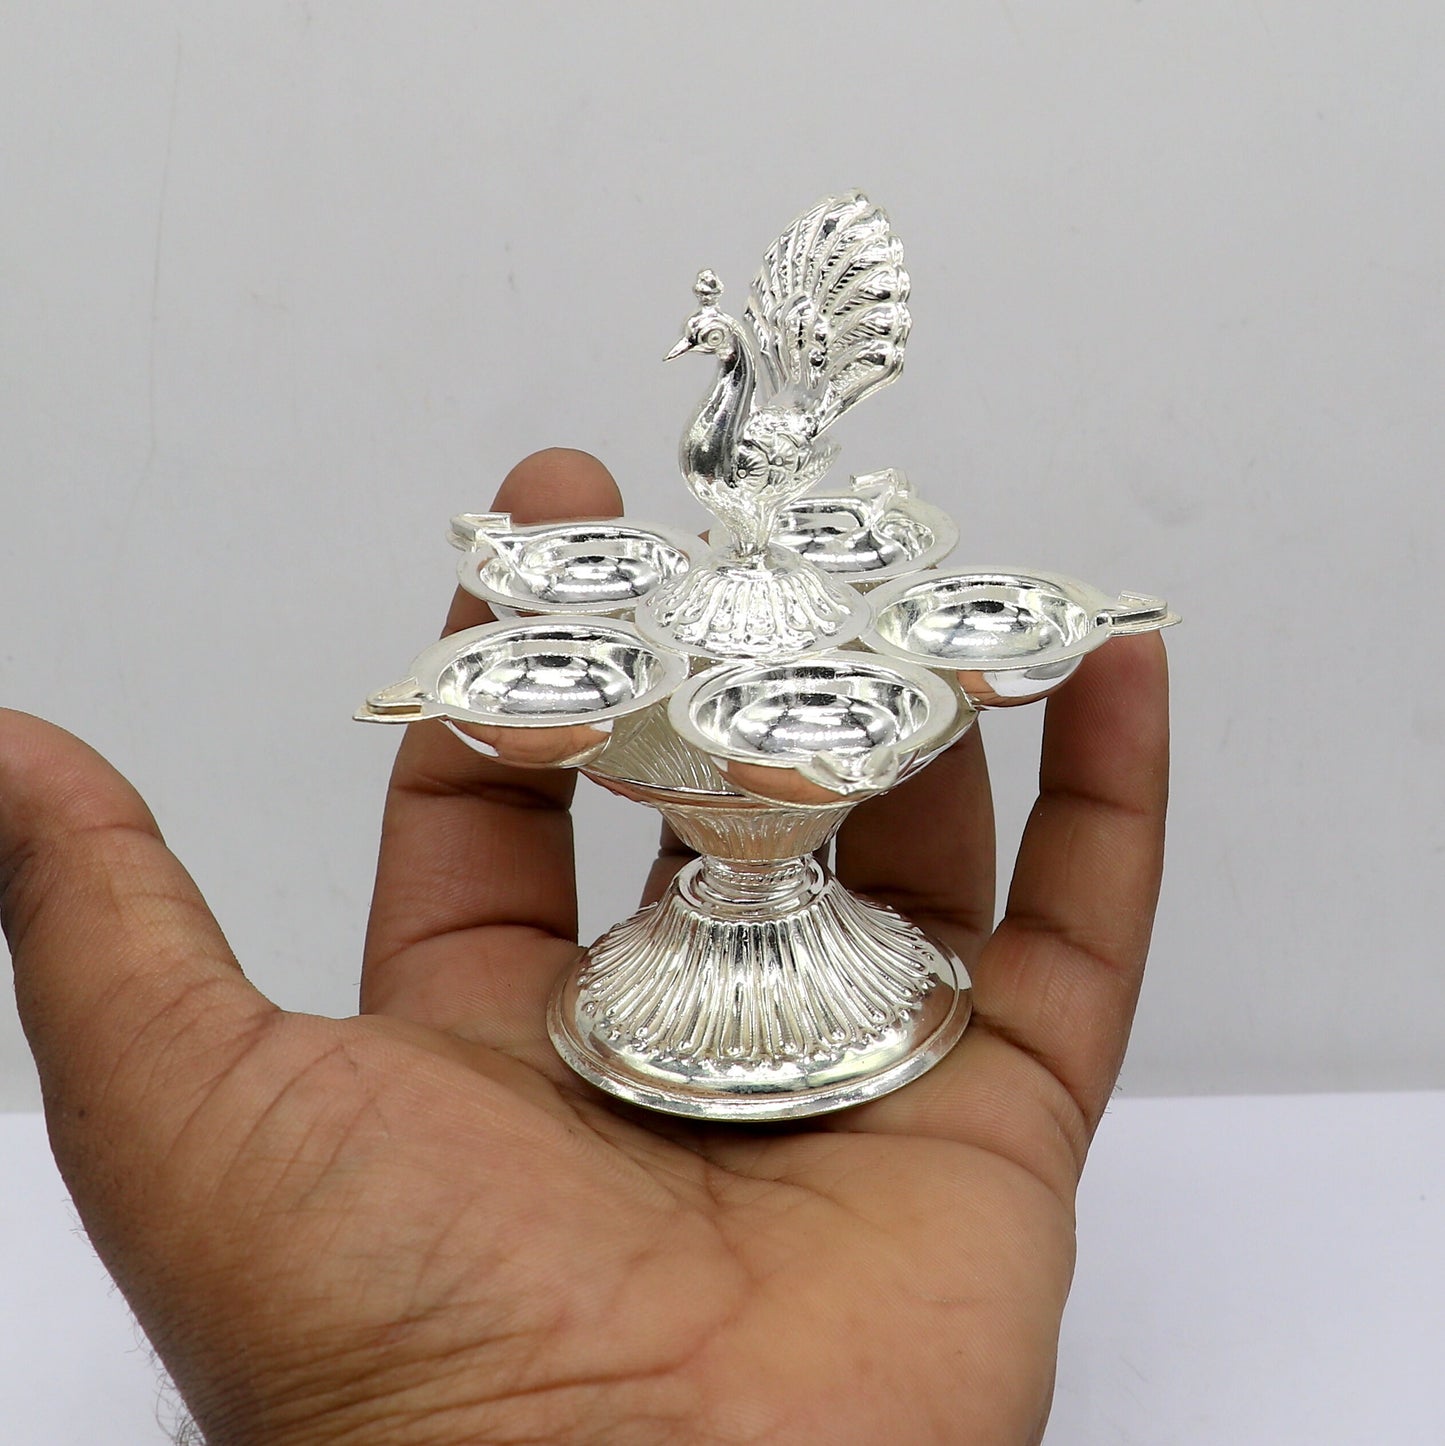 925 sterling silver handcrafted design 5 lamp/ Deepak, silver article, puja utensils, silver figurine su1292